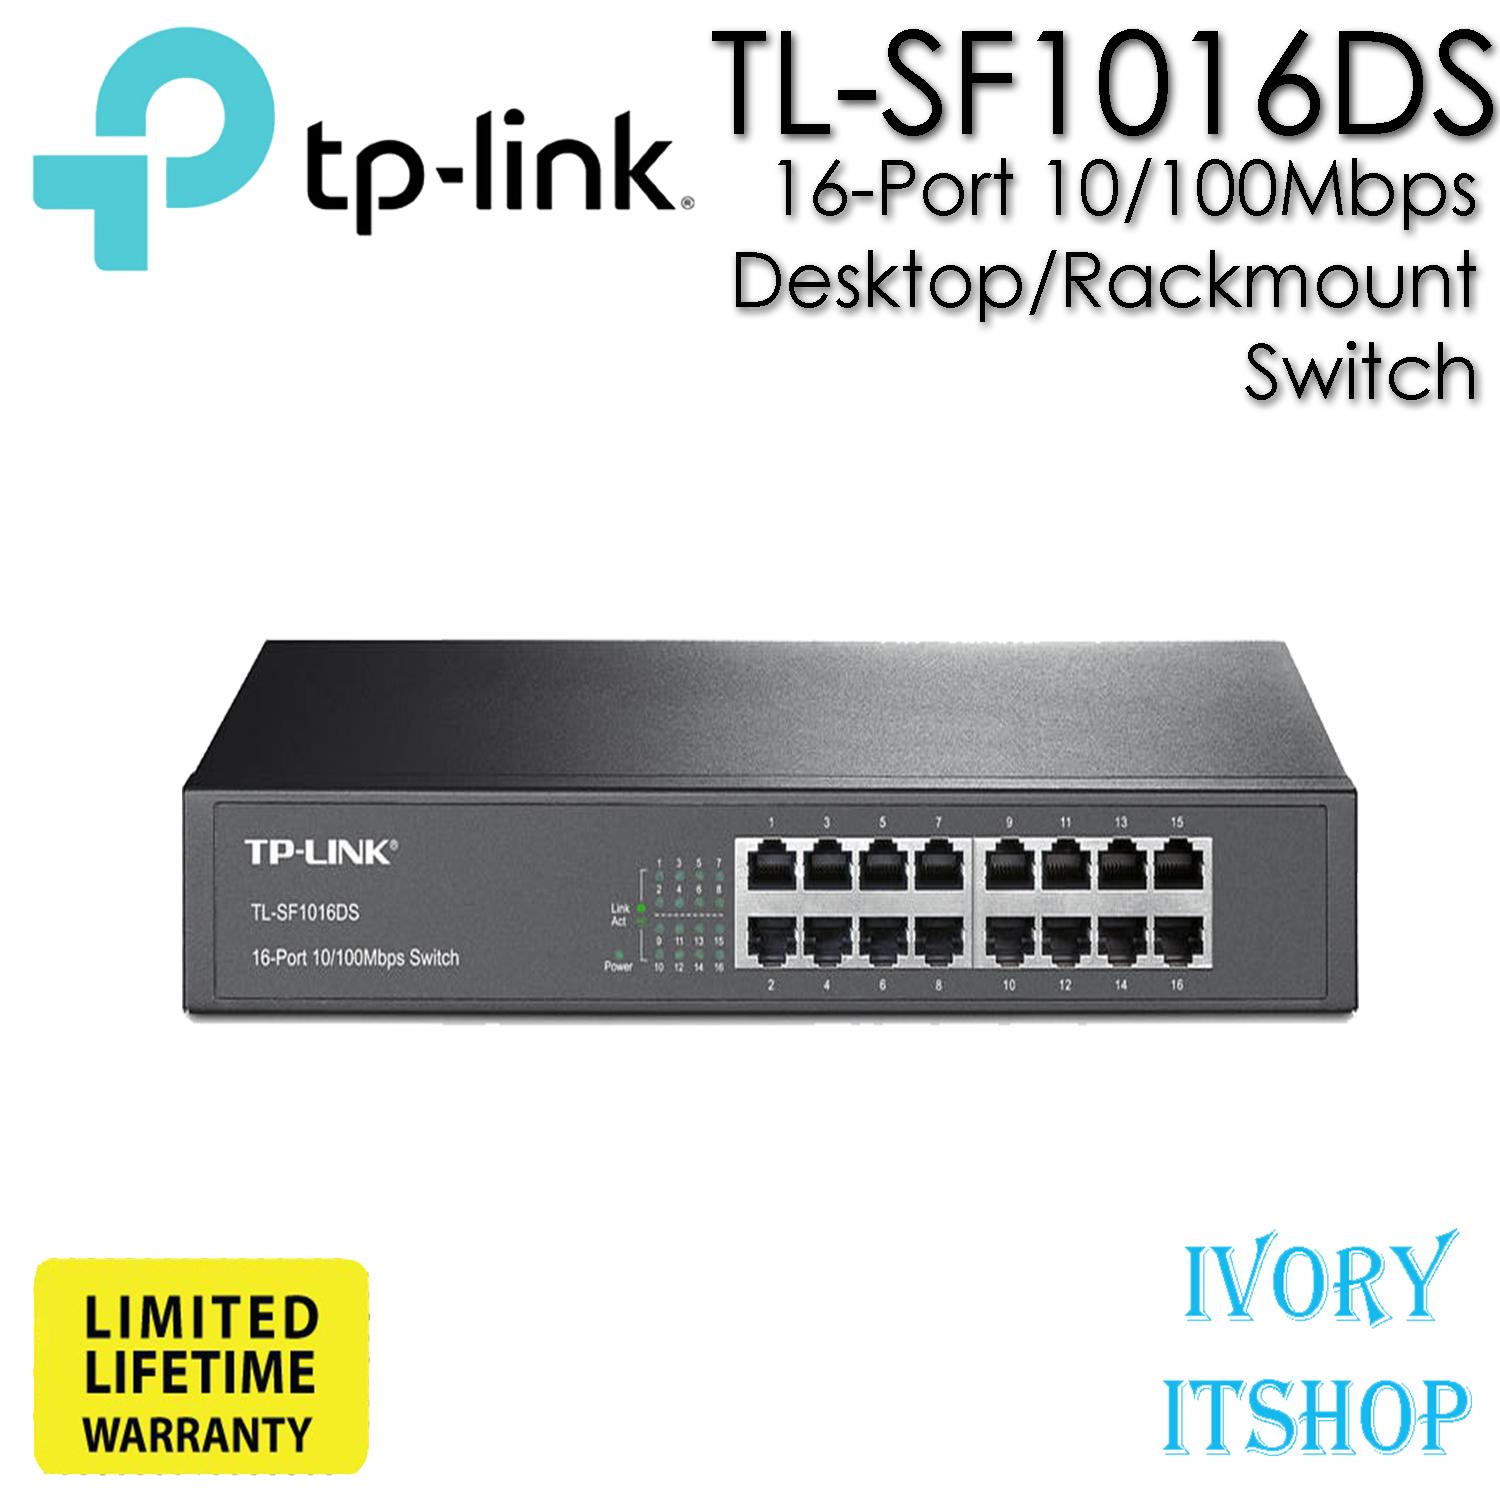 TP-Link  TL-SF1016DS 16-Port 10/100Mbps Desktop/Rackmount Switch SF1016DS/ivoryitshop